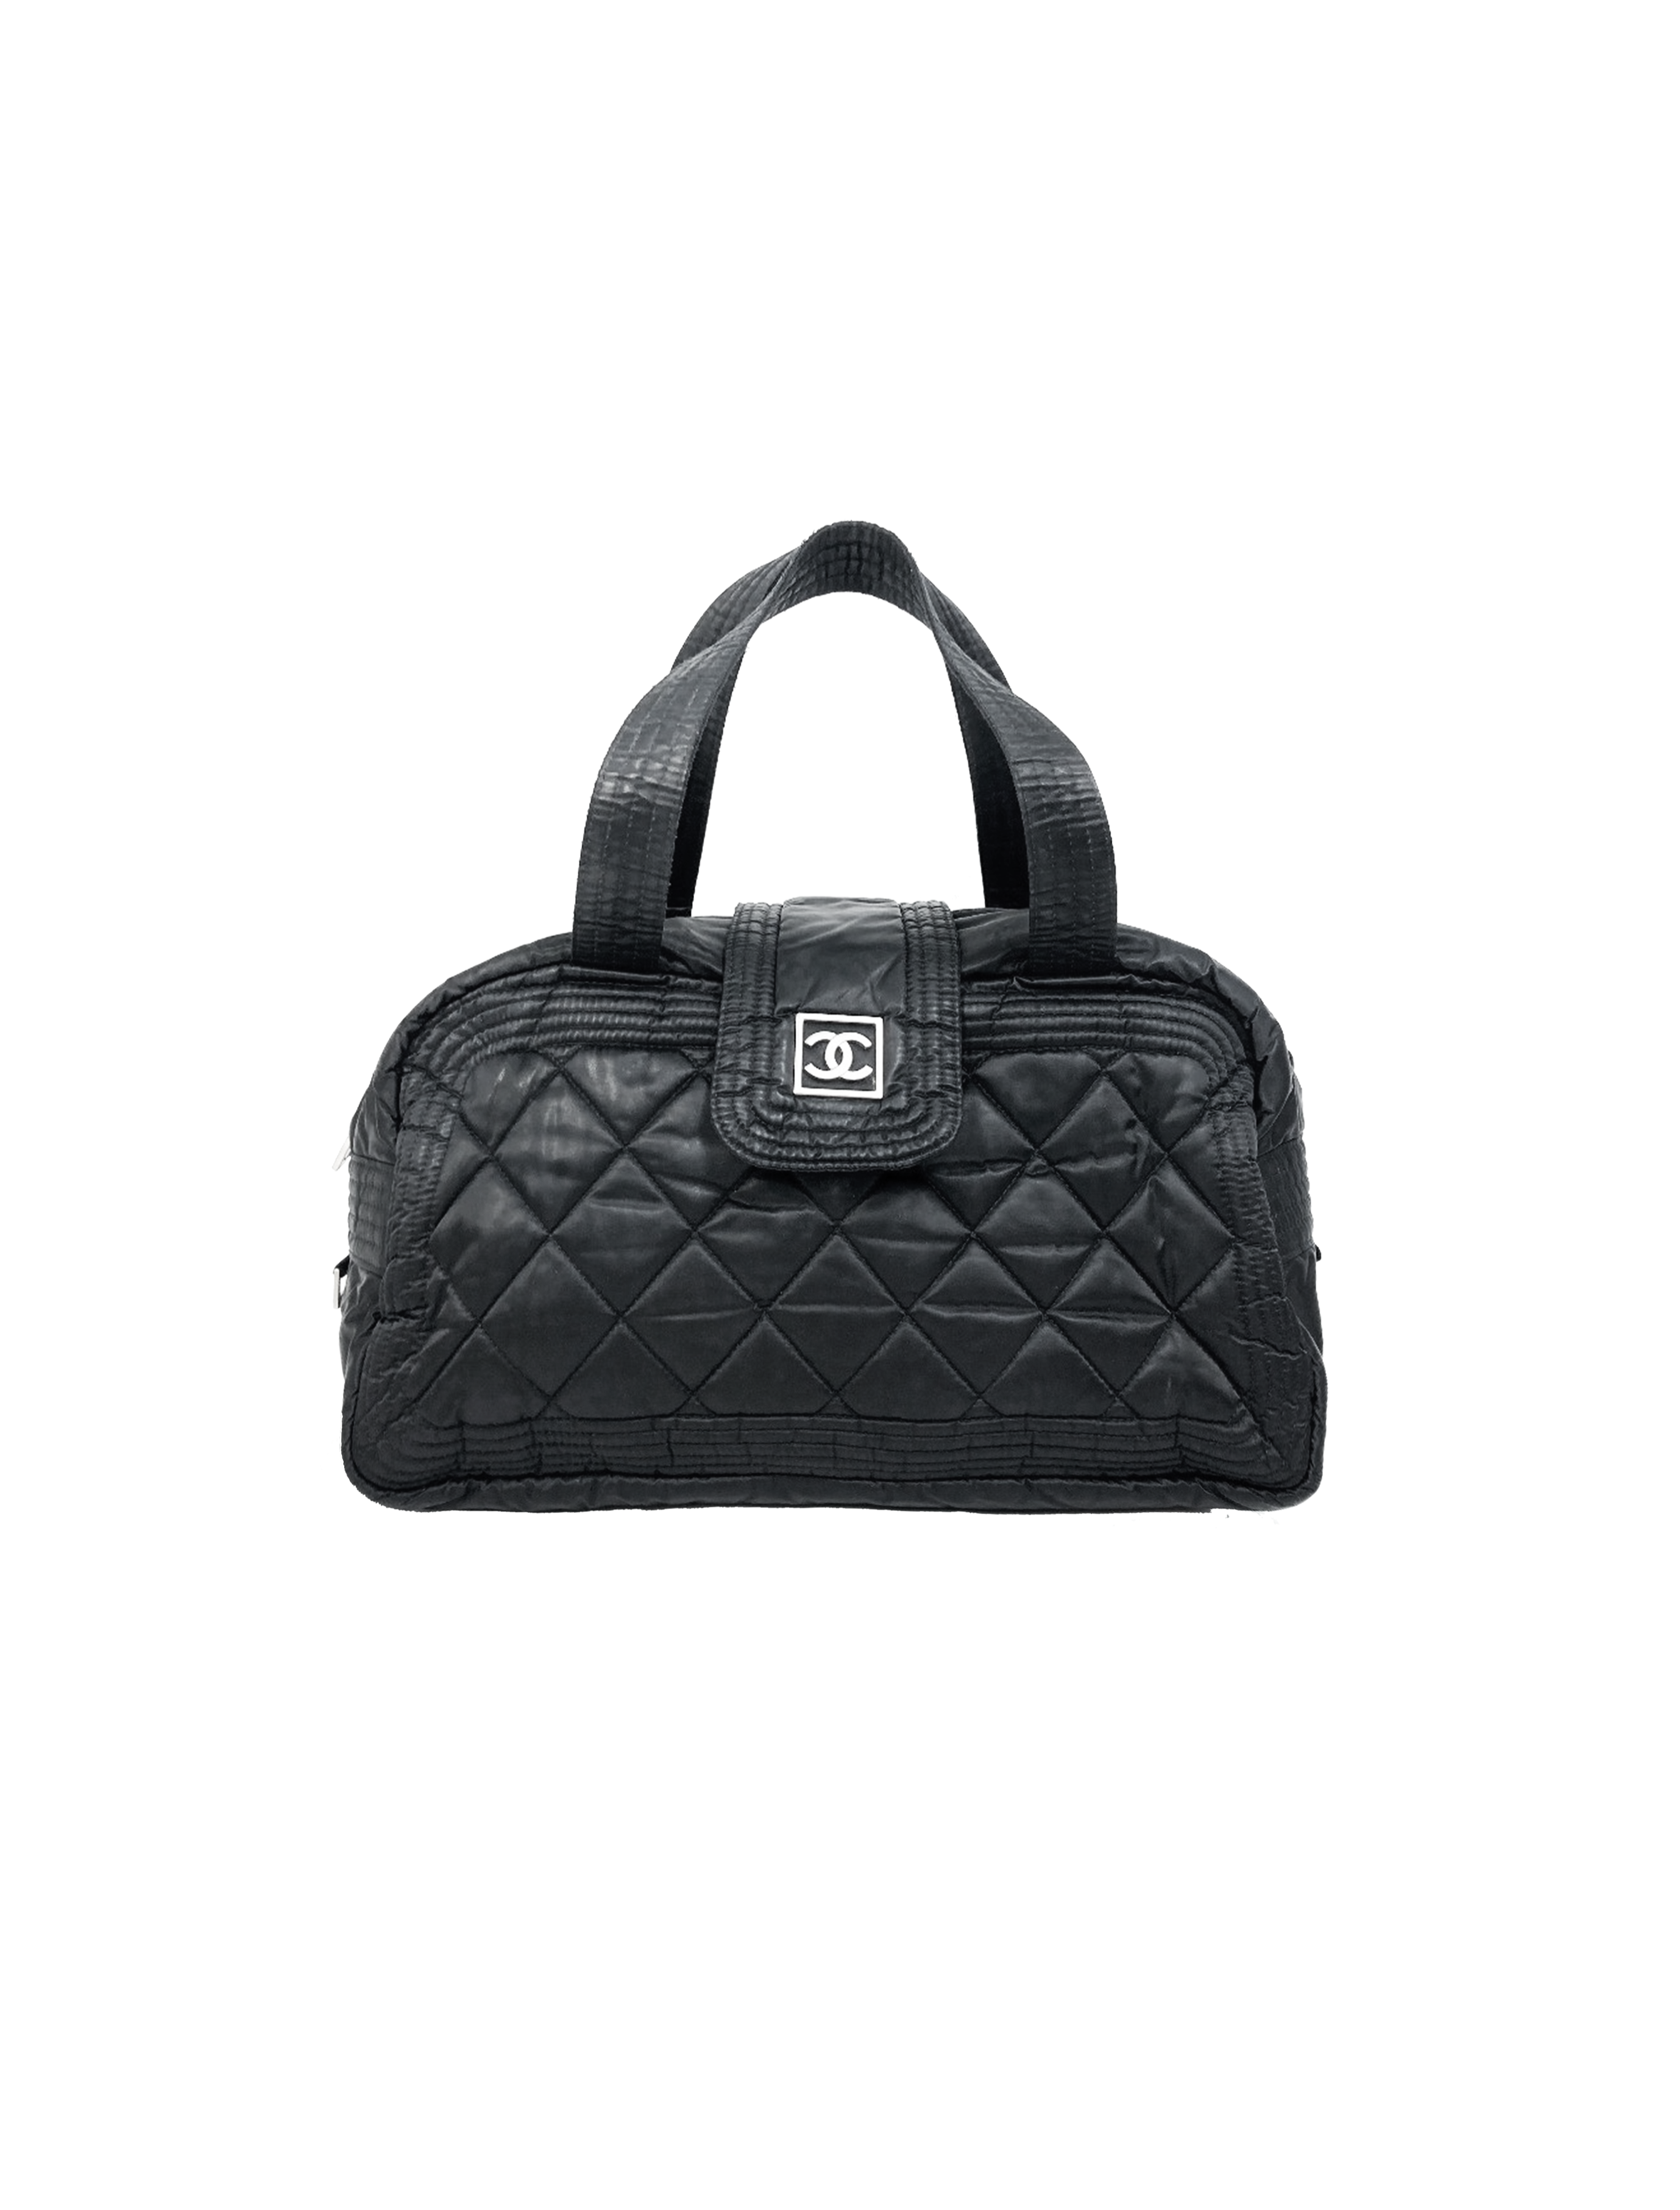 Chanel 2005 Sports Black Nylon Tote Bag